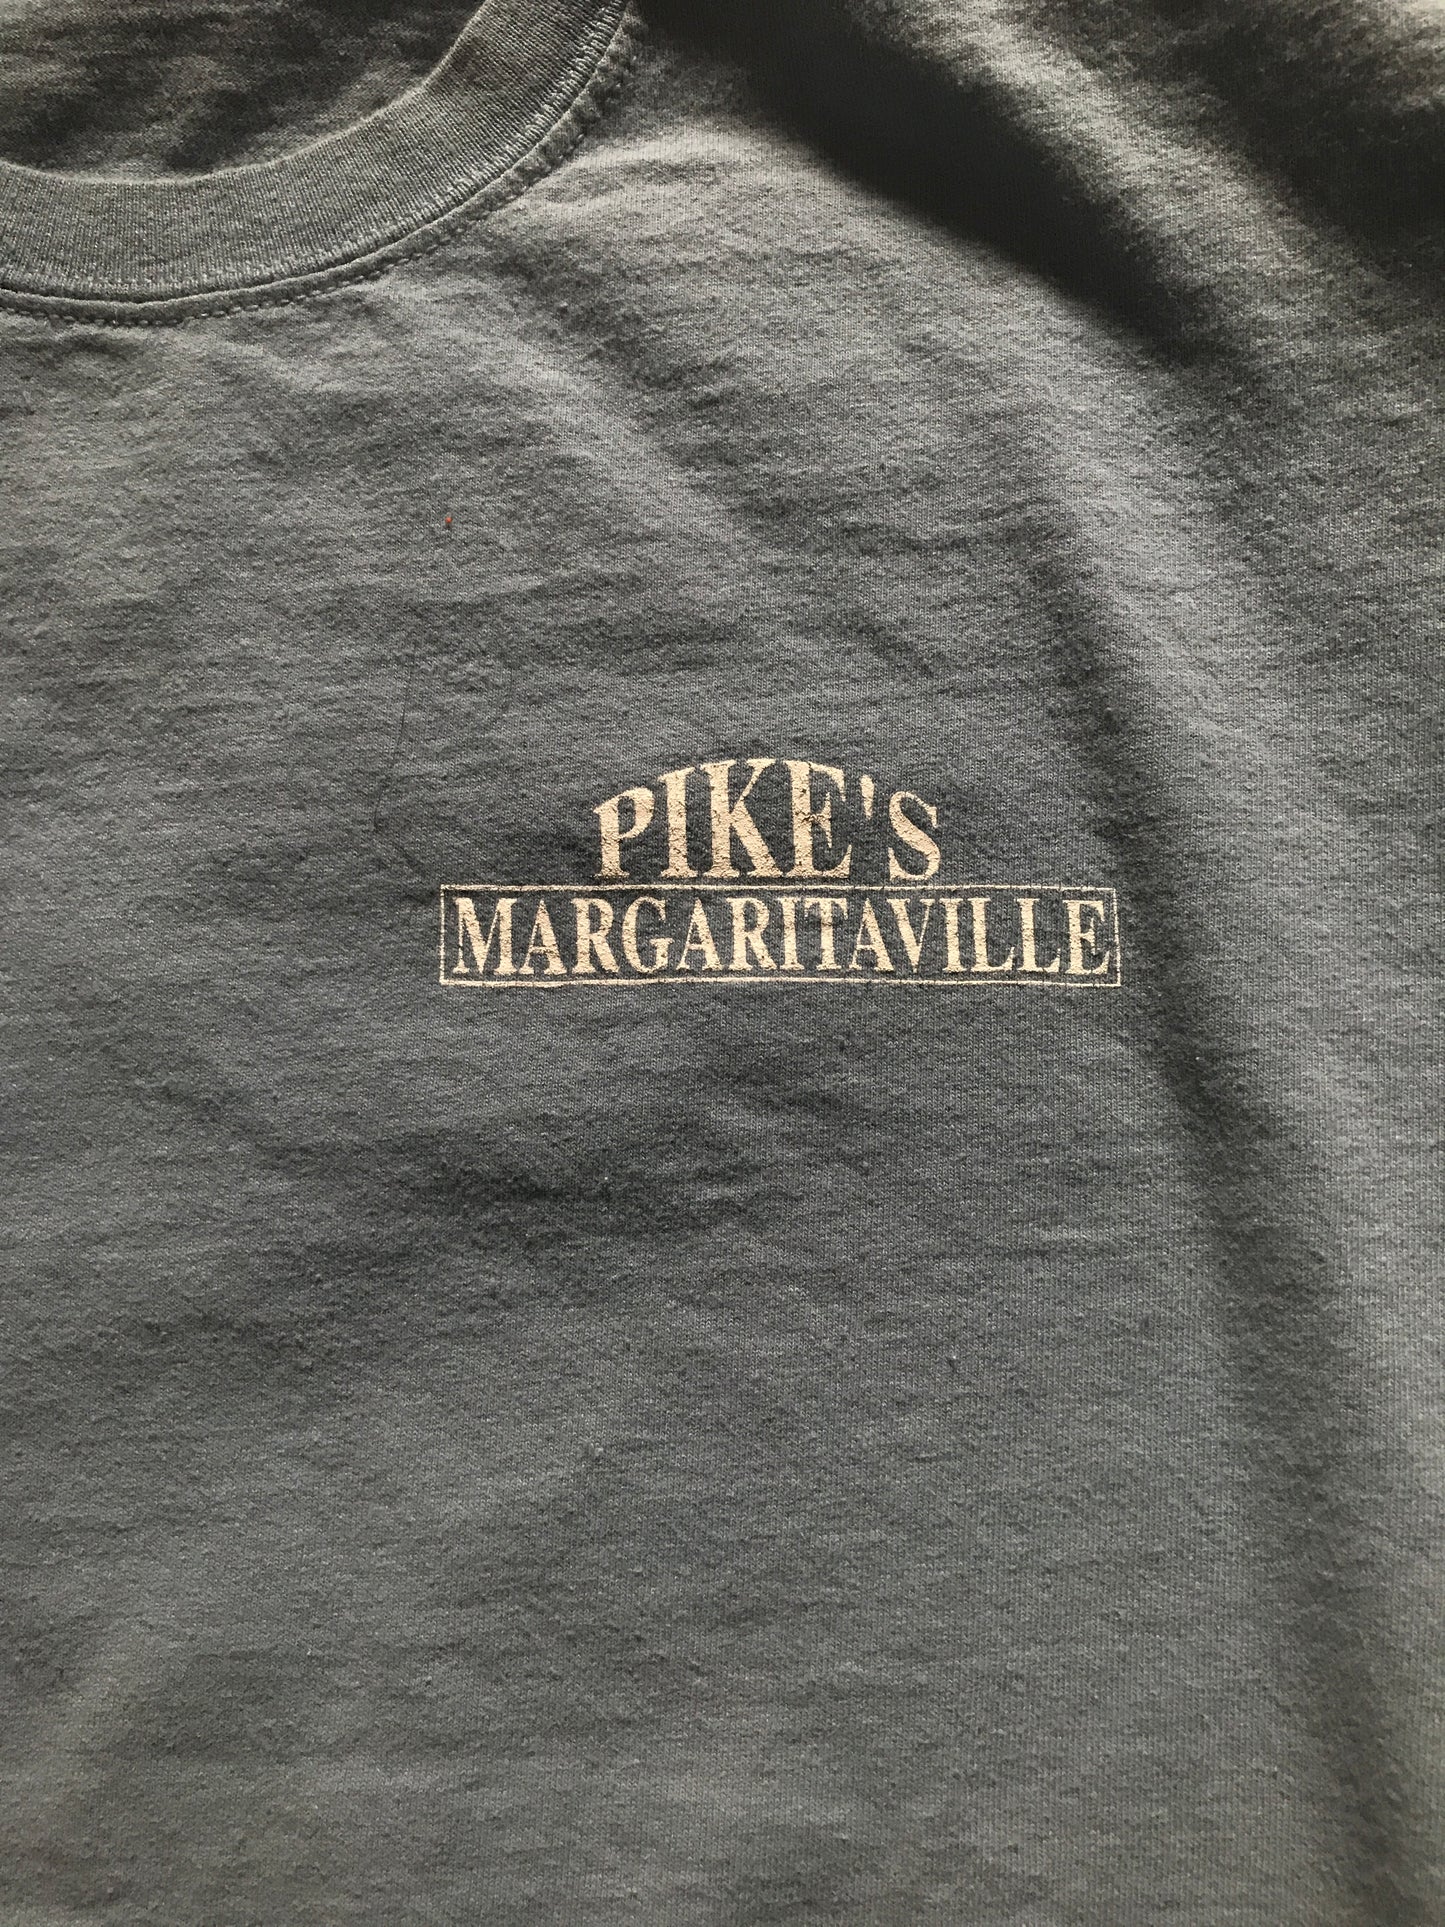 Playera Pike's Margaritaville